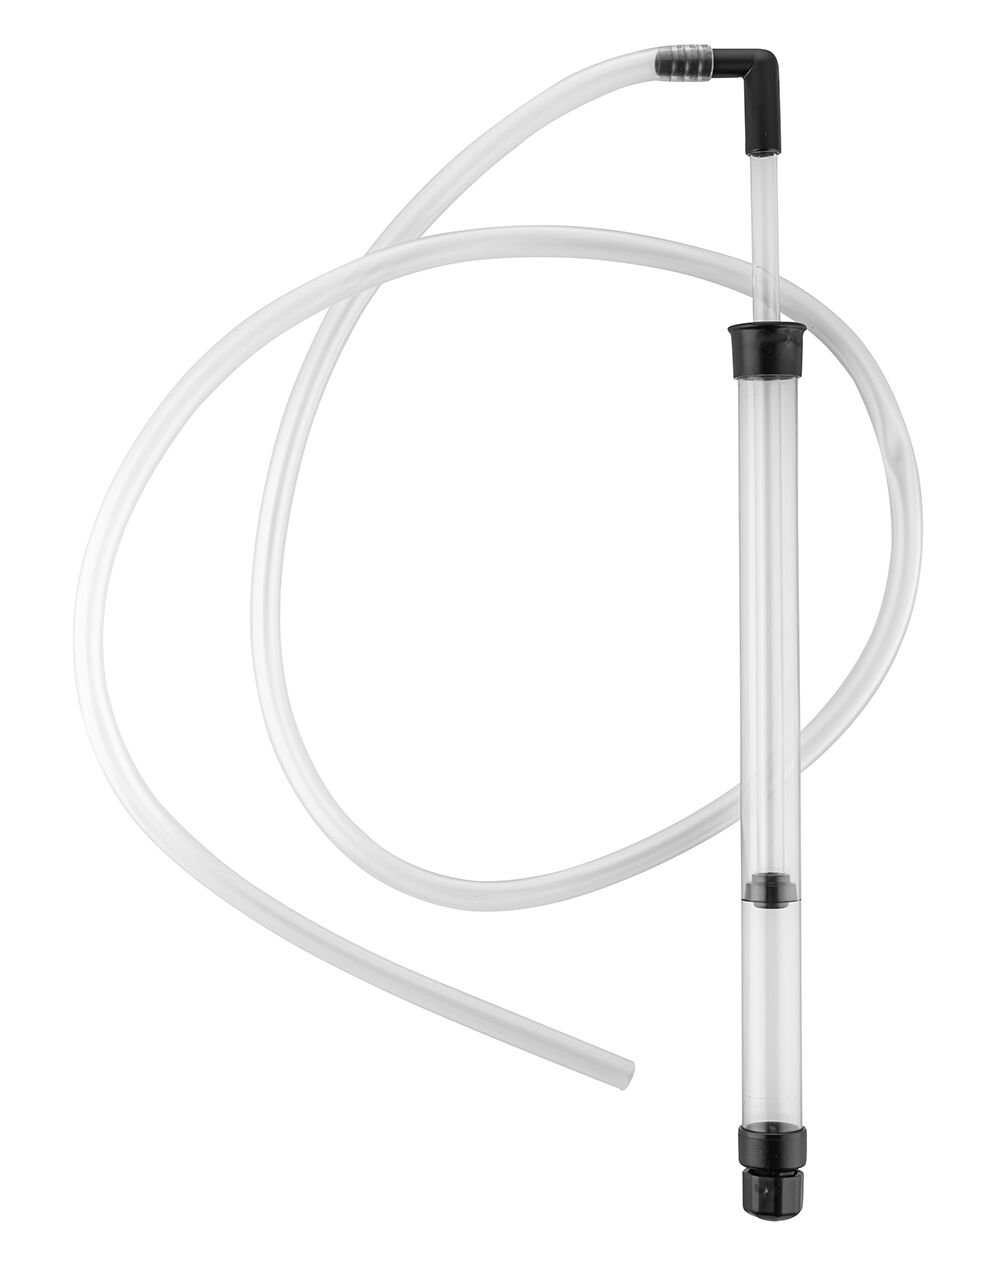 Otomatik Sifonlama (Aktarma) Çubuğu - 44 cm